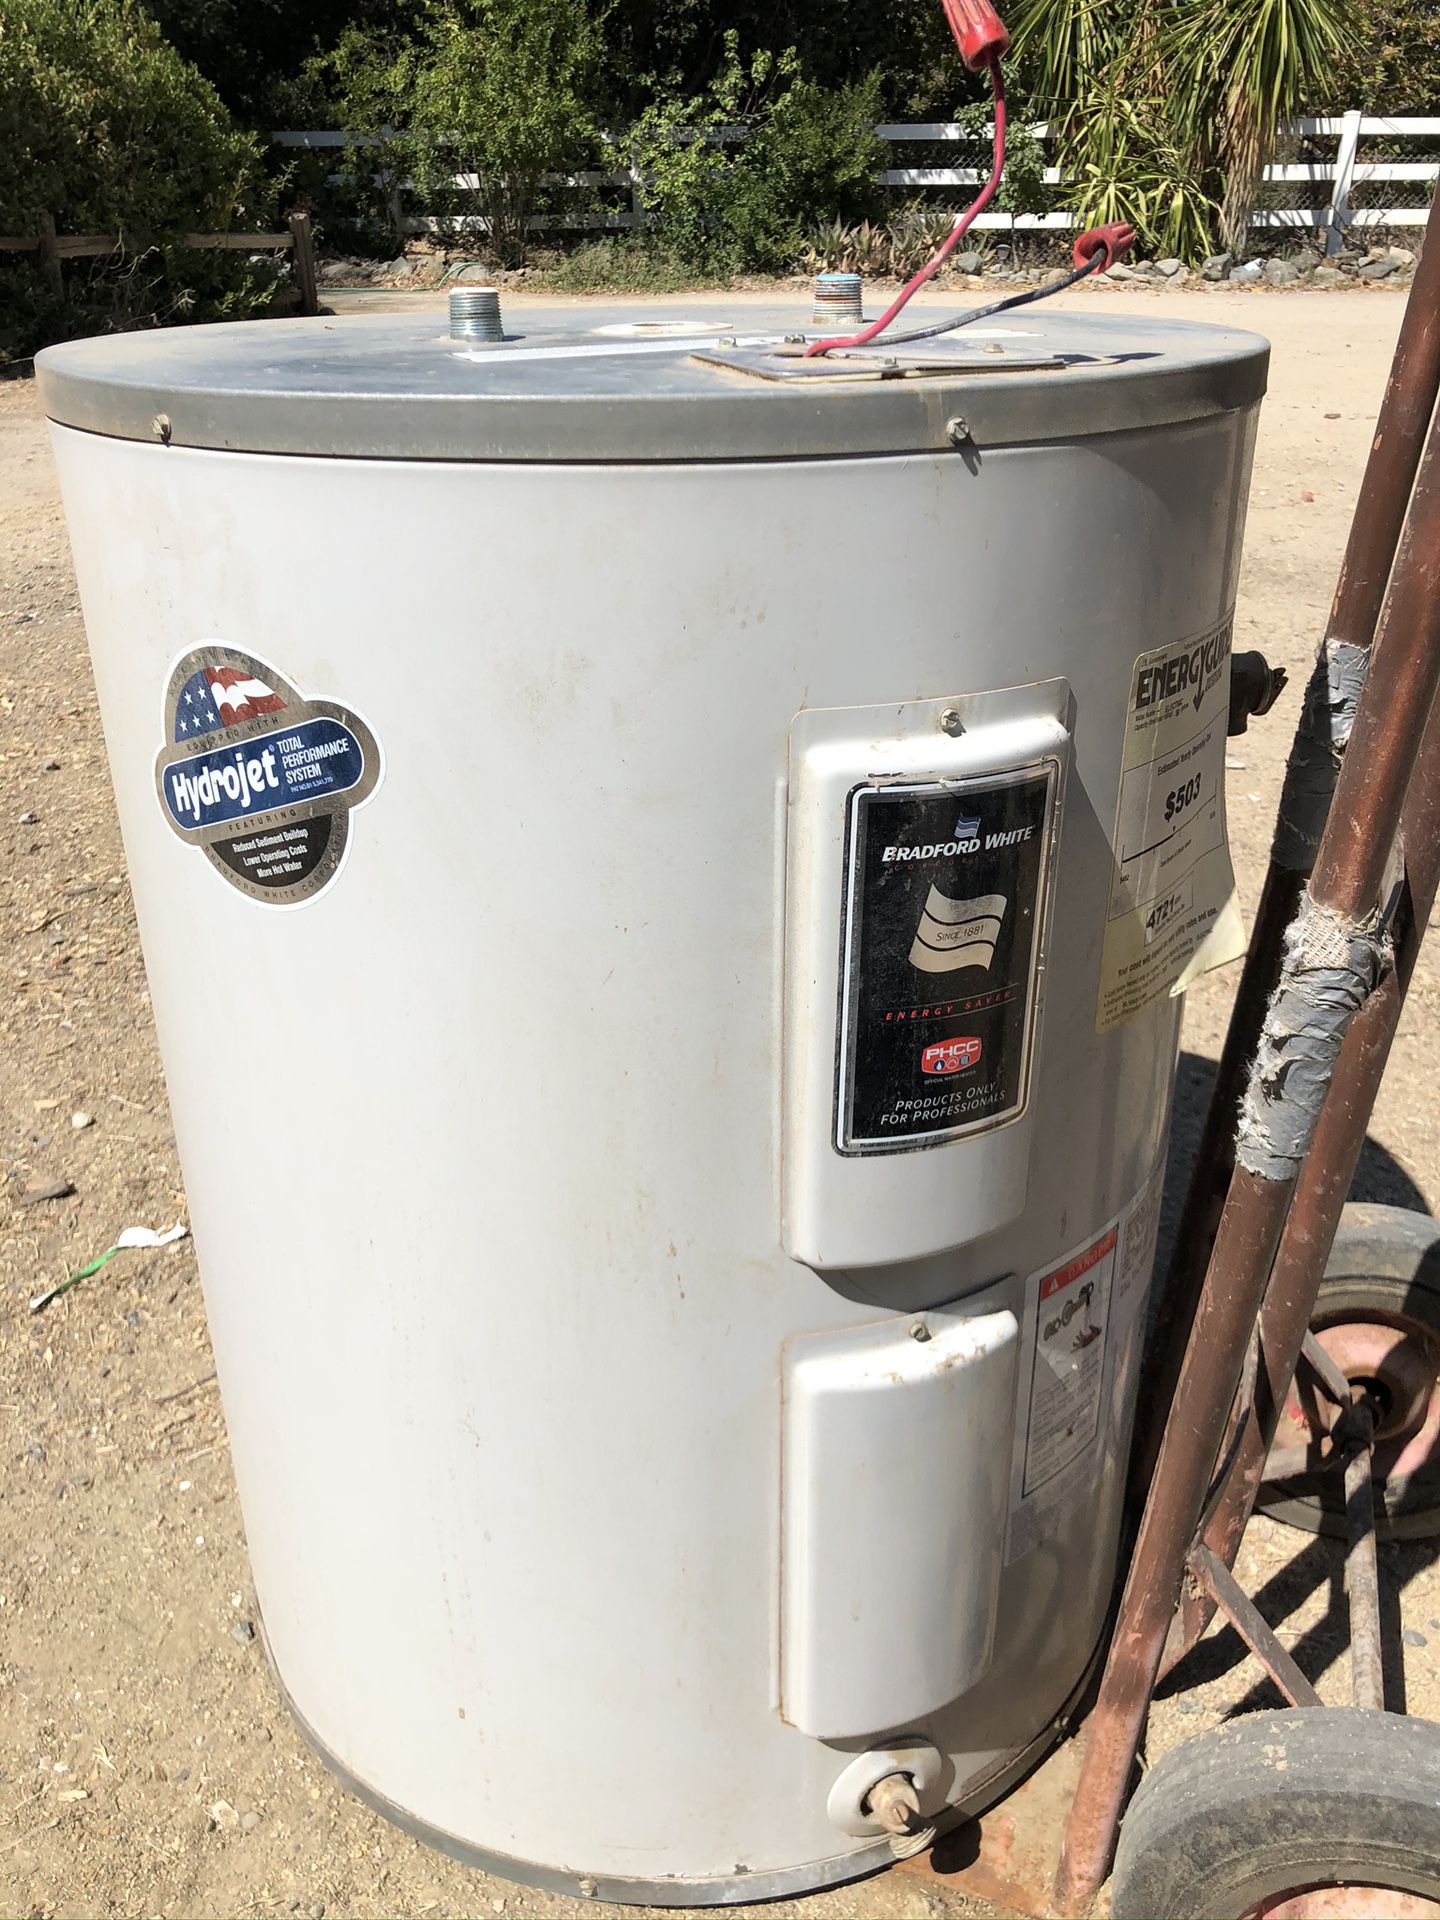 40 gallon electric hot water heater. Bradford white